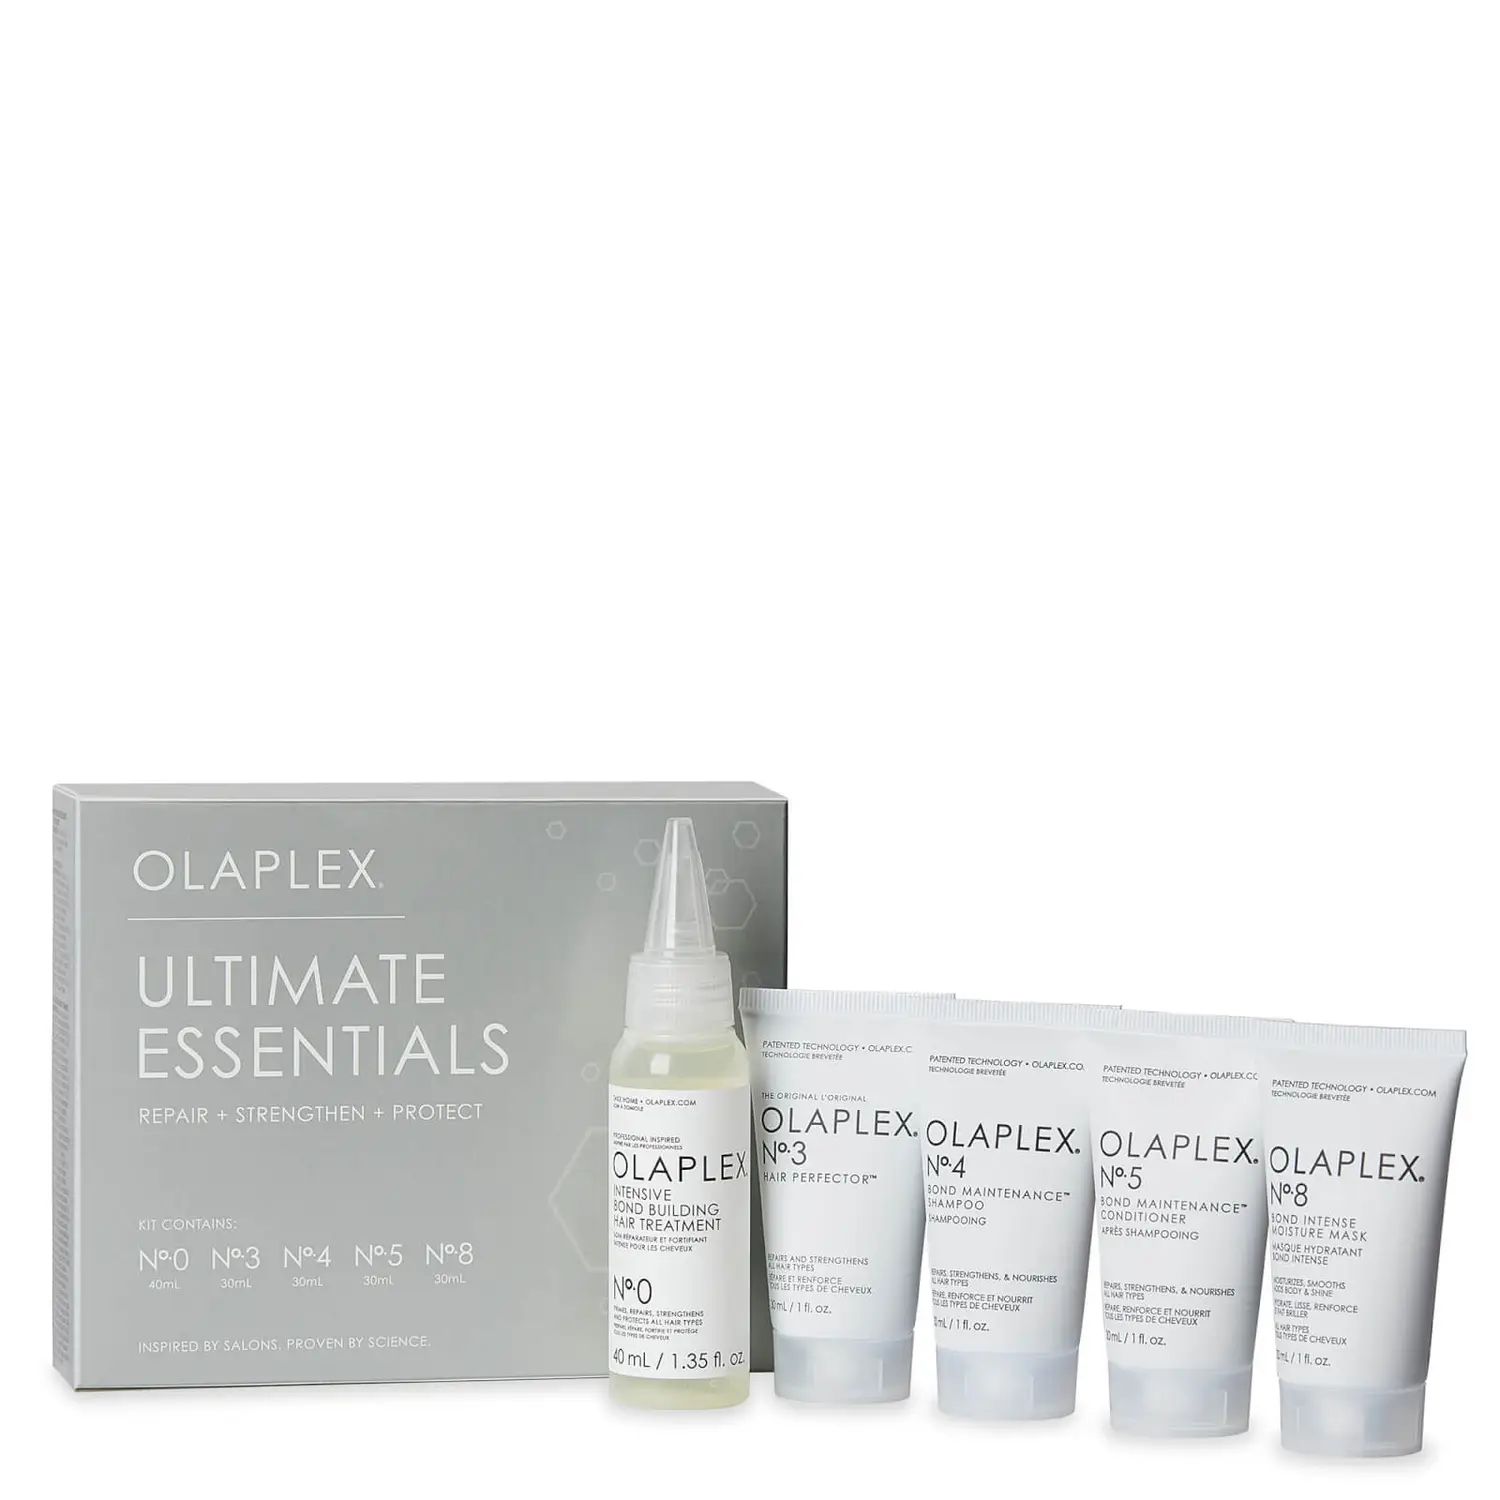 Olaplex Ultimate Essentials Kit (Worth £30.00) | Cult Beauty